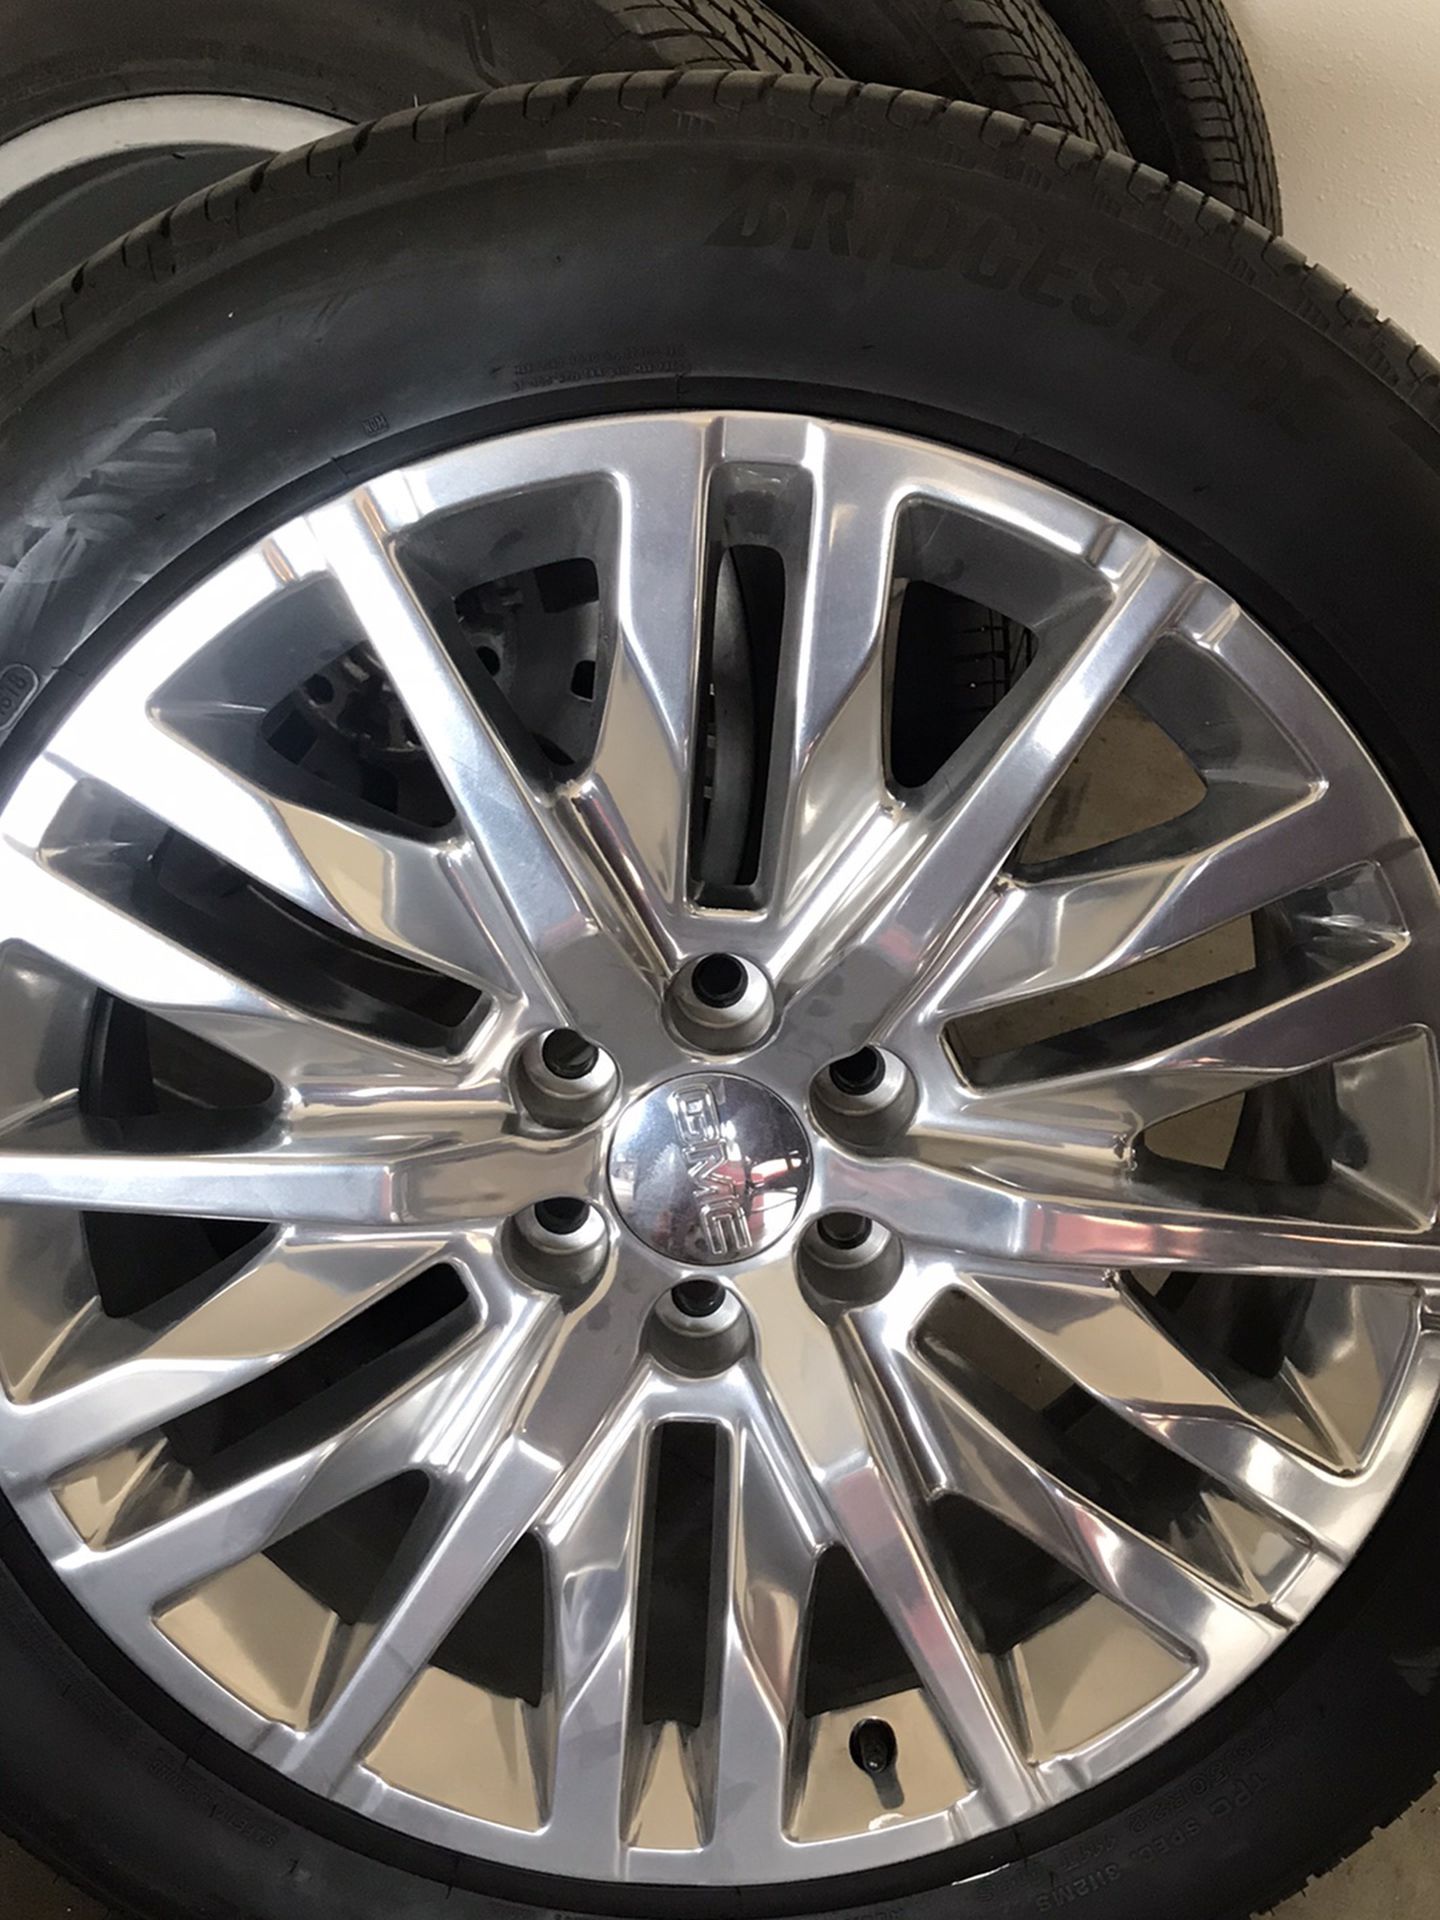 2019 GMC Sierra Denali Wheels And Bridgestone Tires